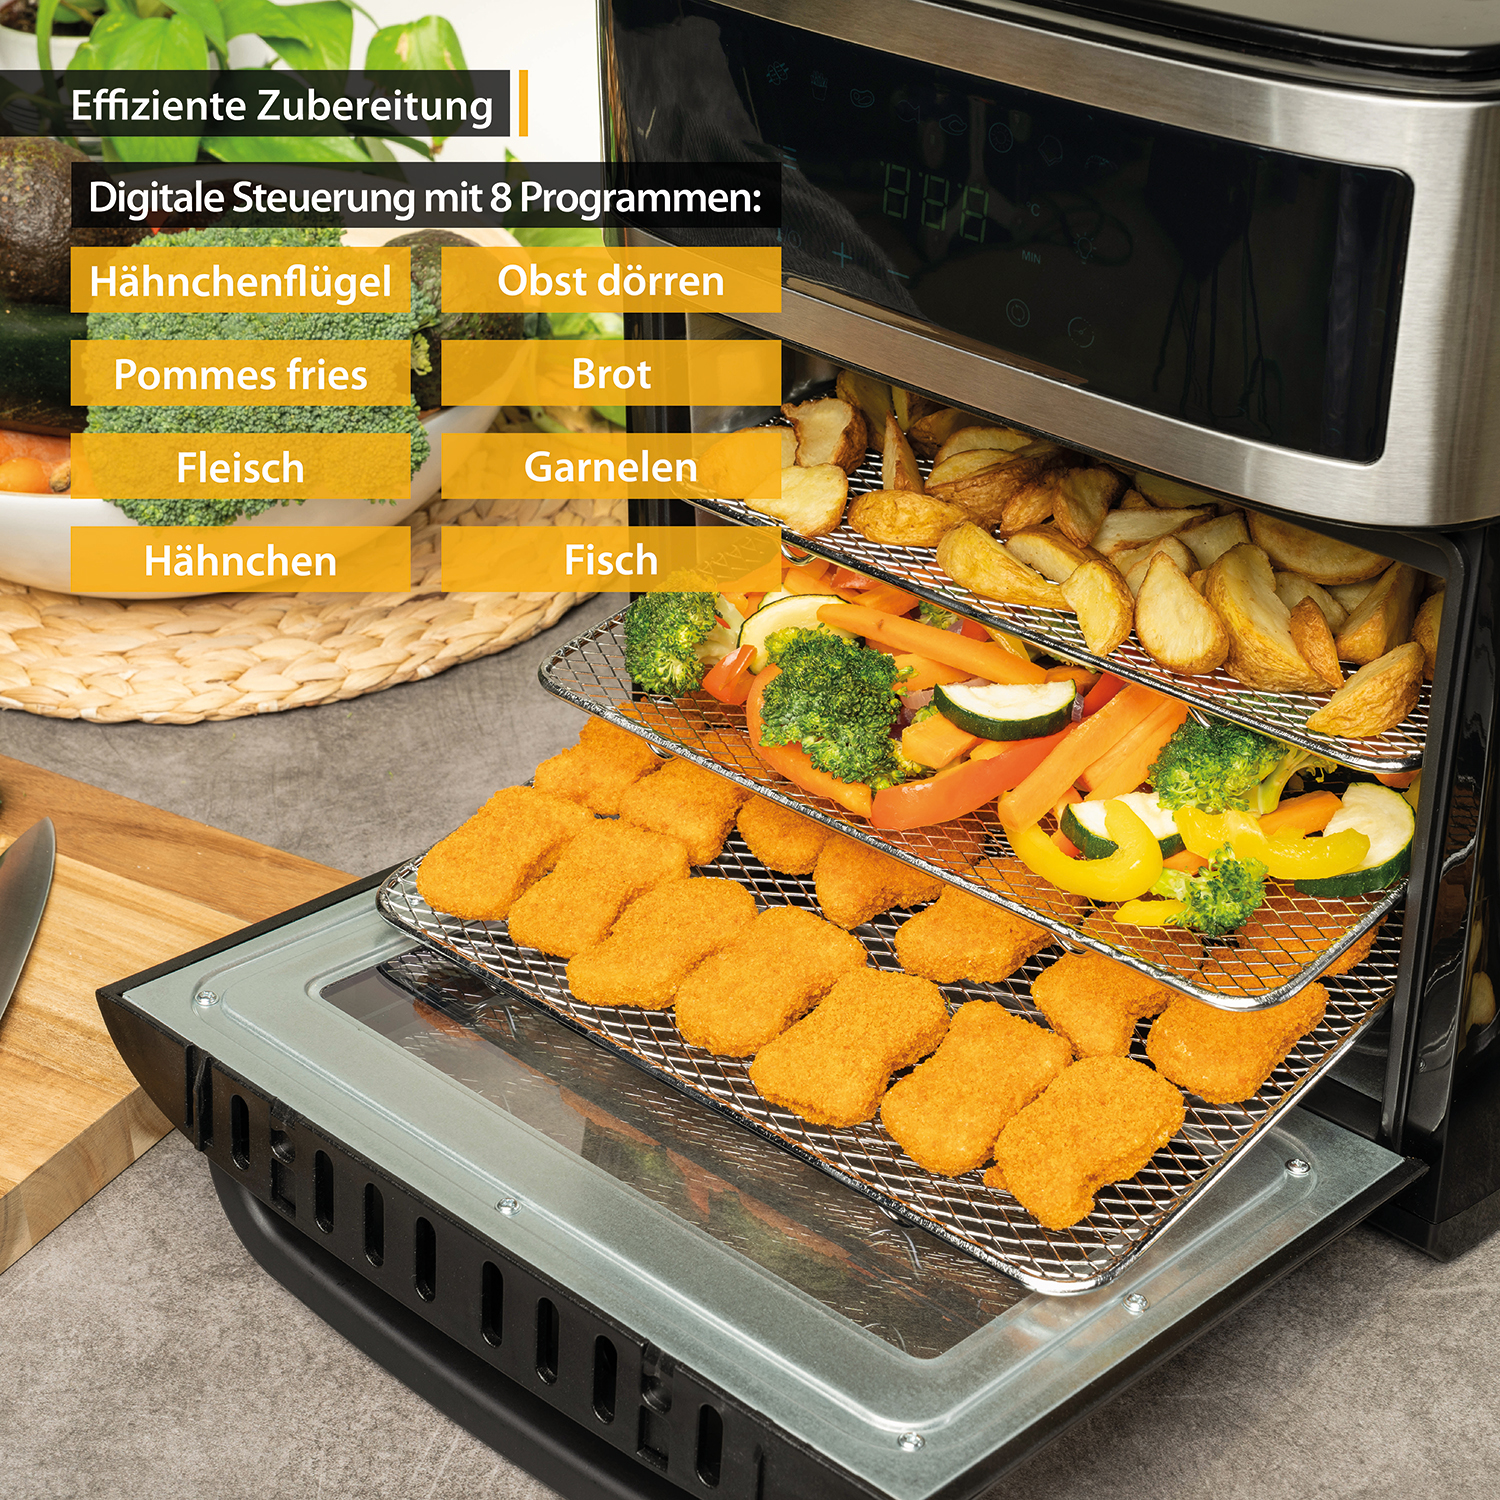 Hot air oven 13 liter | Mini oven | Dehydrator